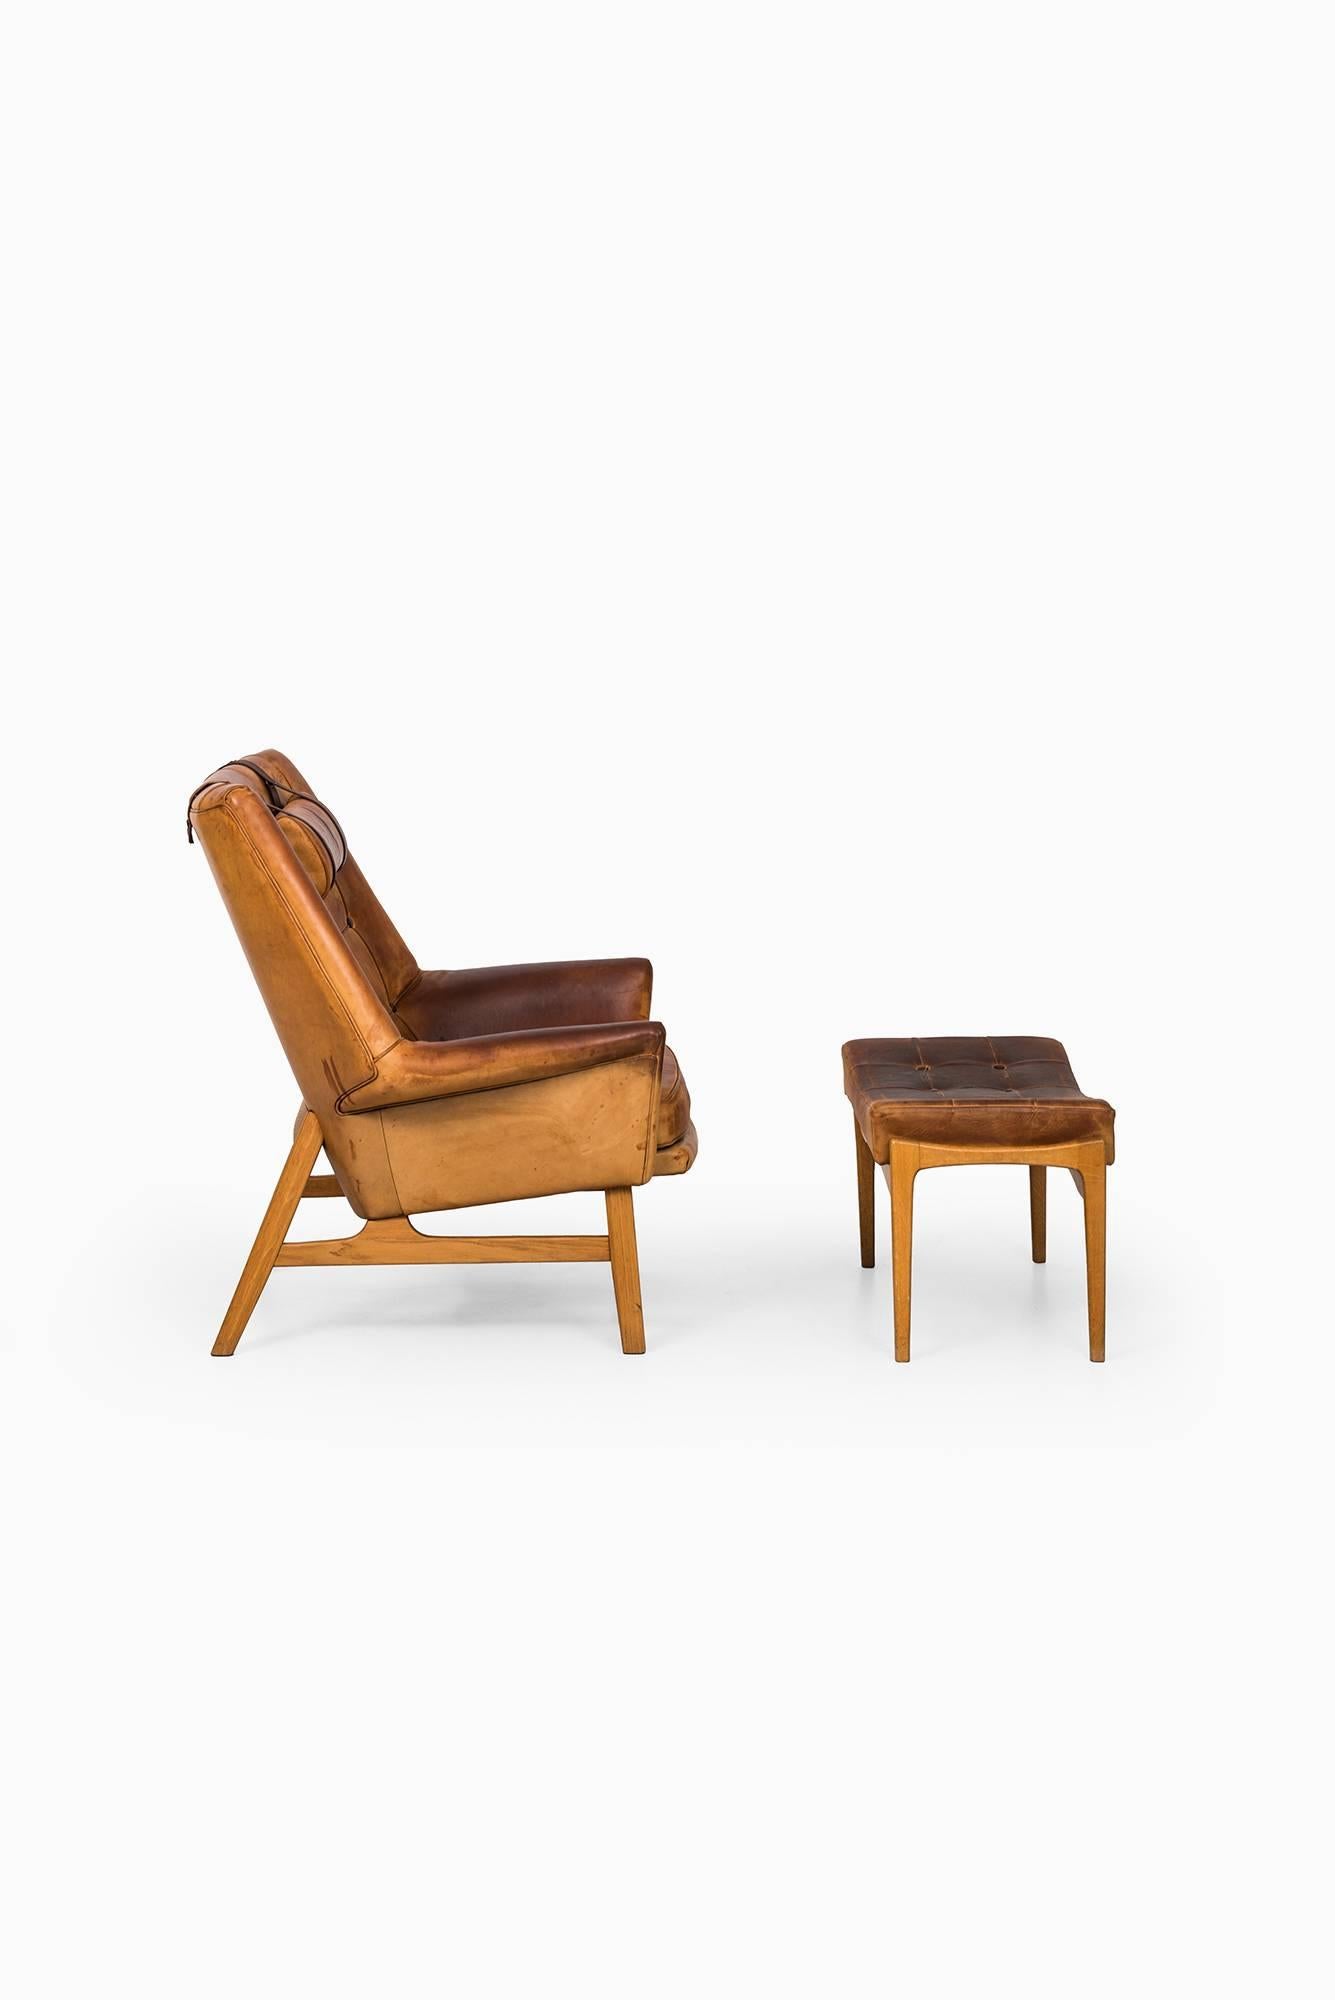 Scandinavian Modern Tove & Edvard Kindt-Larsen Easy Chair Model Glimminge by Ope in Sweden